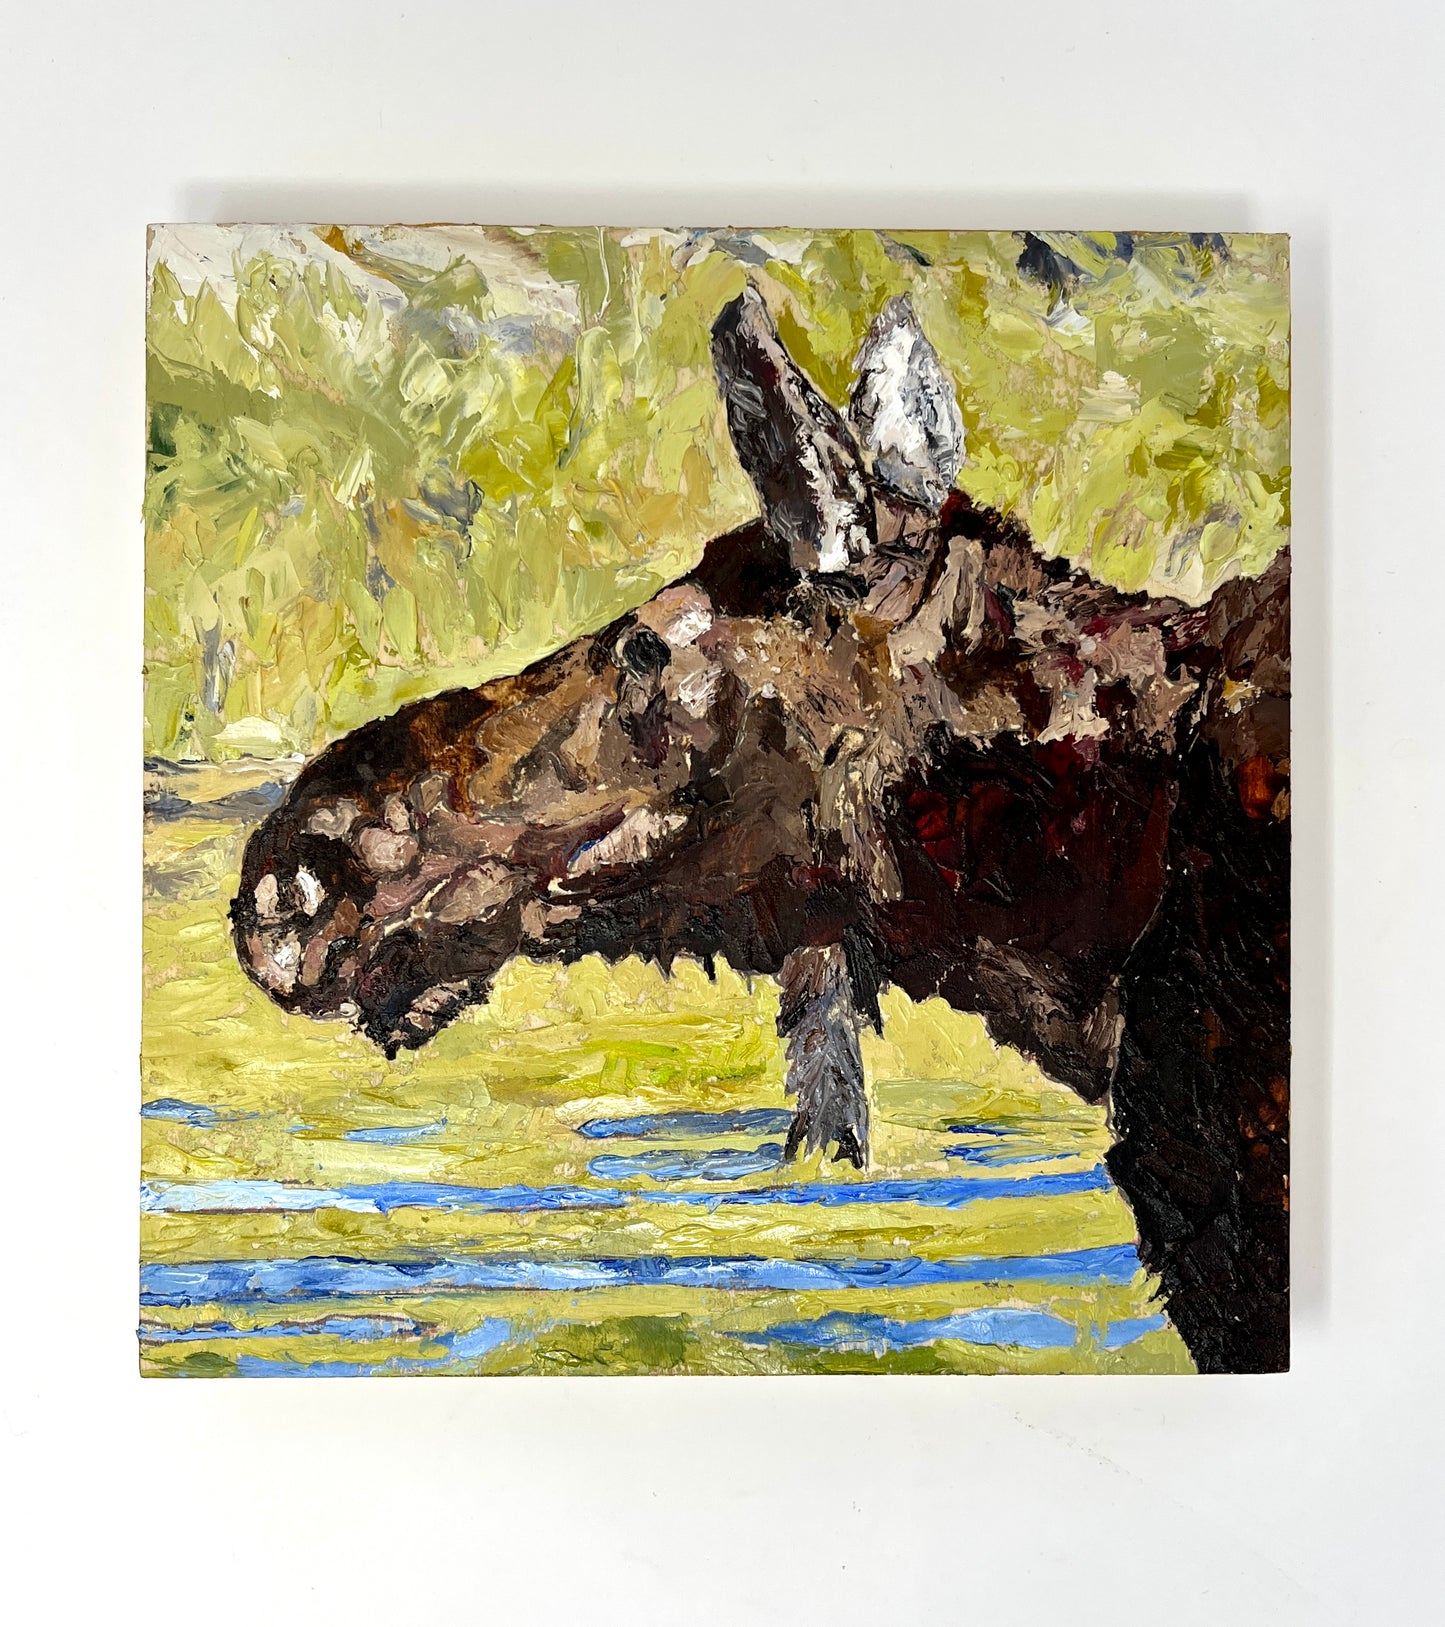 Richard Tambor: Portrait of a Moose